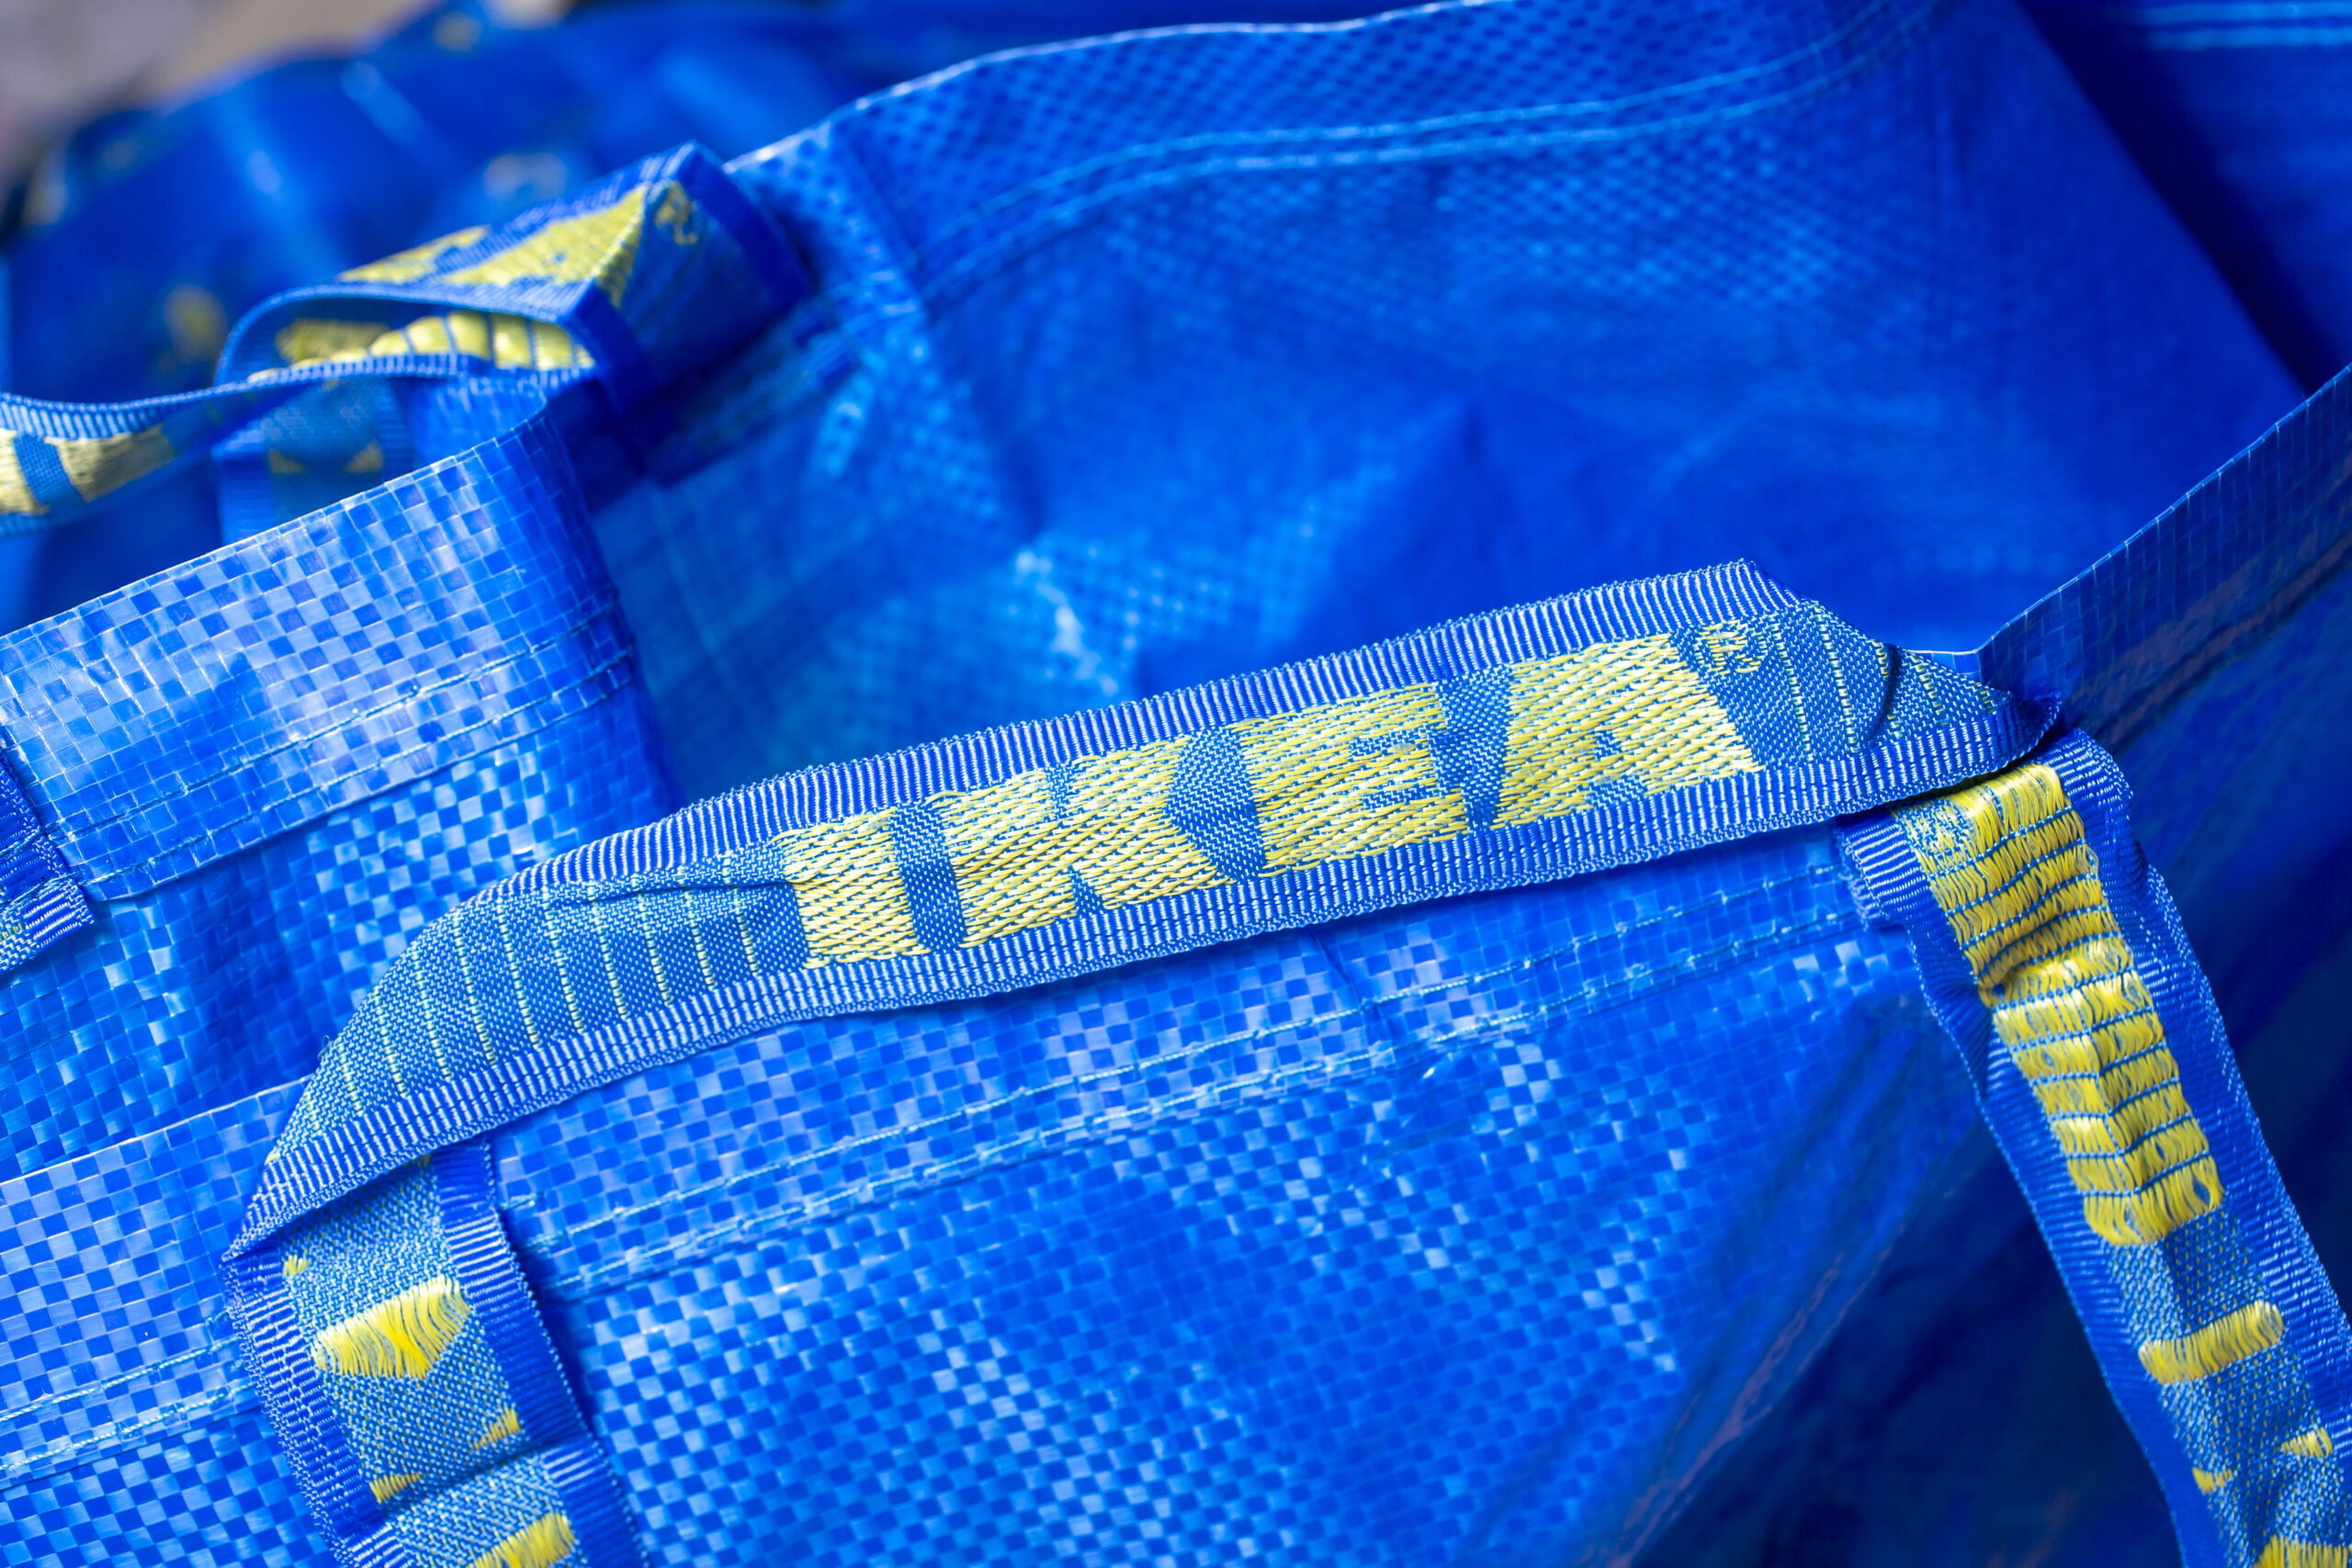 IKEA fratka remade bum bag all handmade DIY upcycled funny party bag